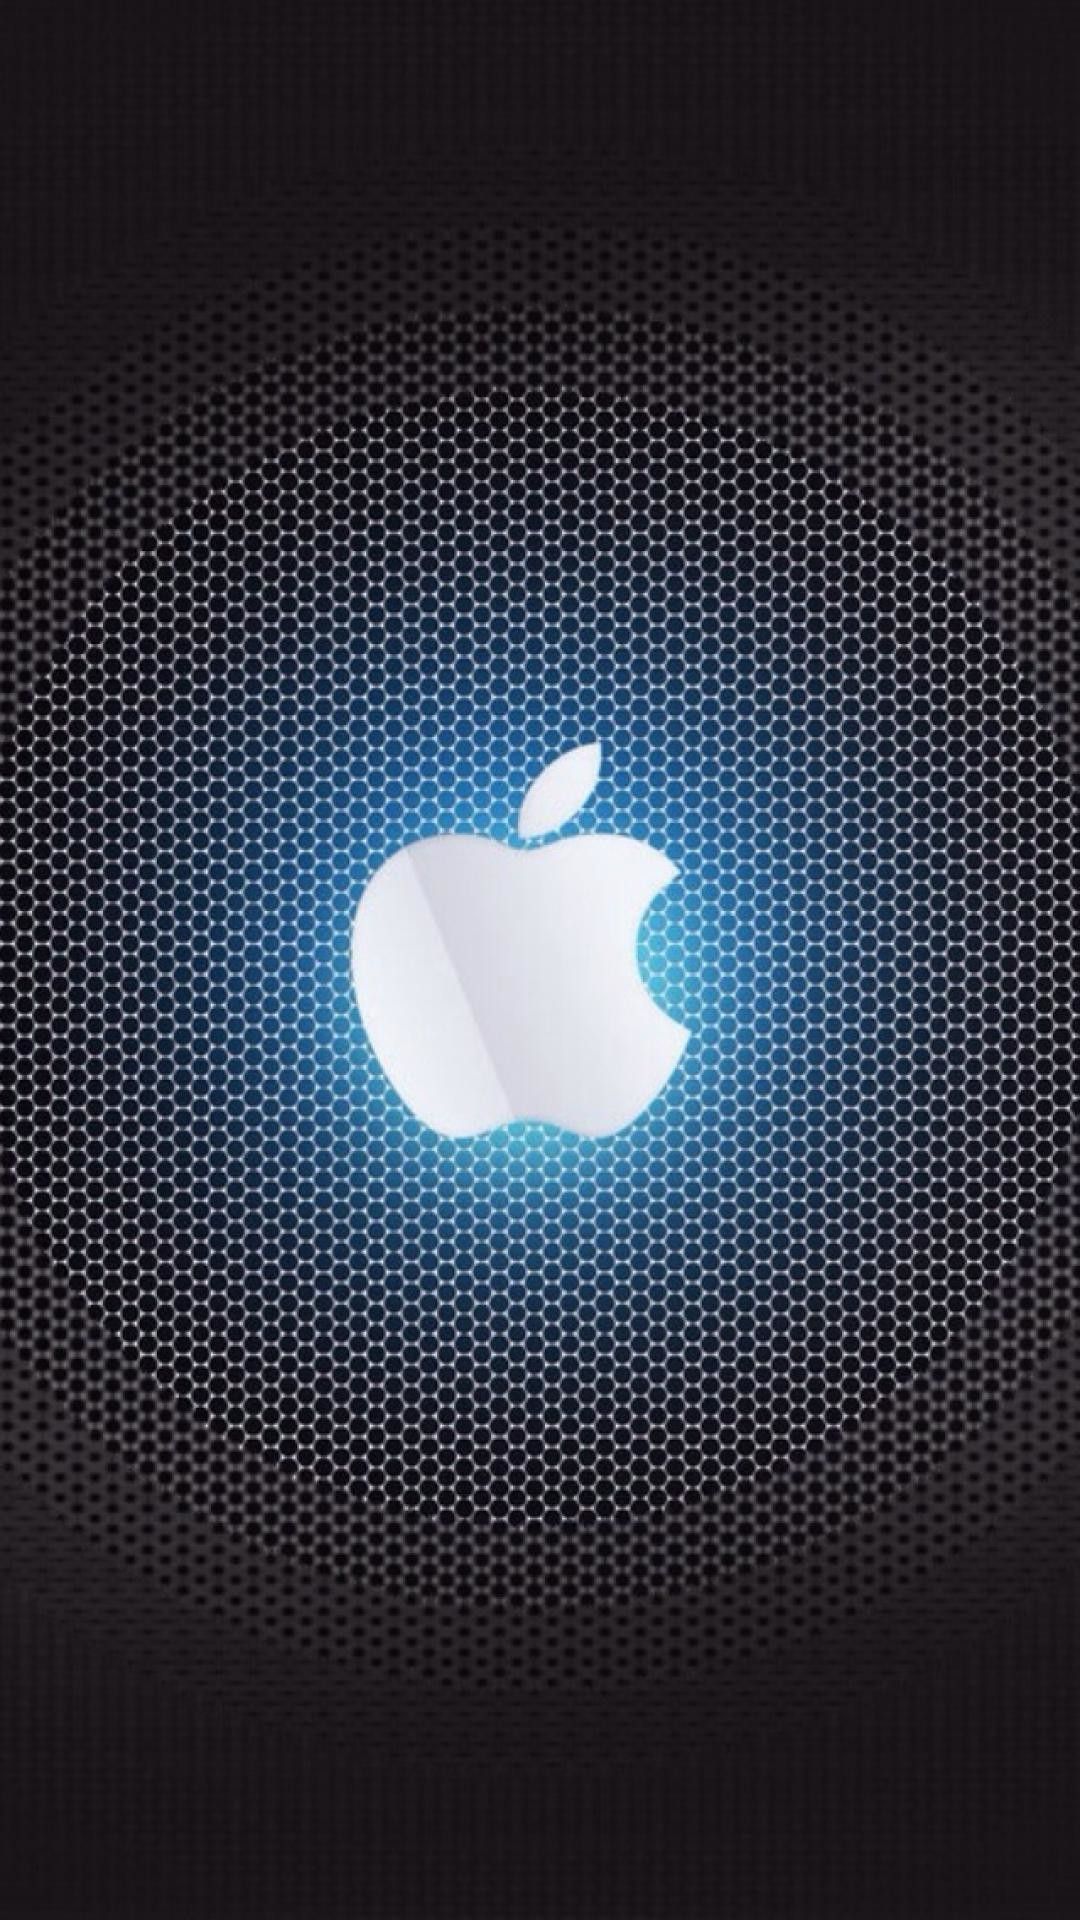 Apple 4k Ultra HD Wallpaper Wallpaper Light